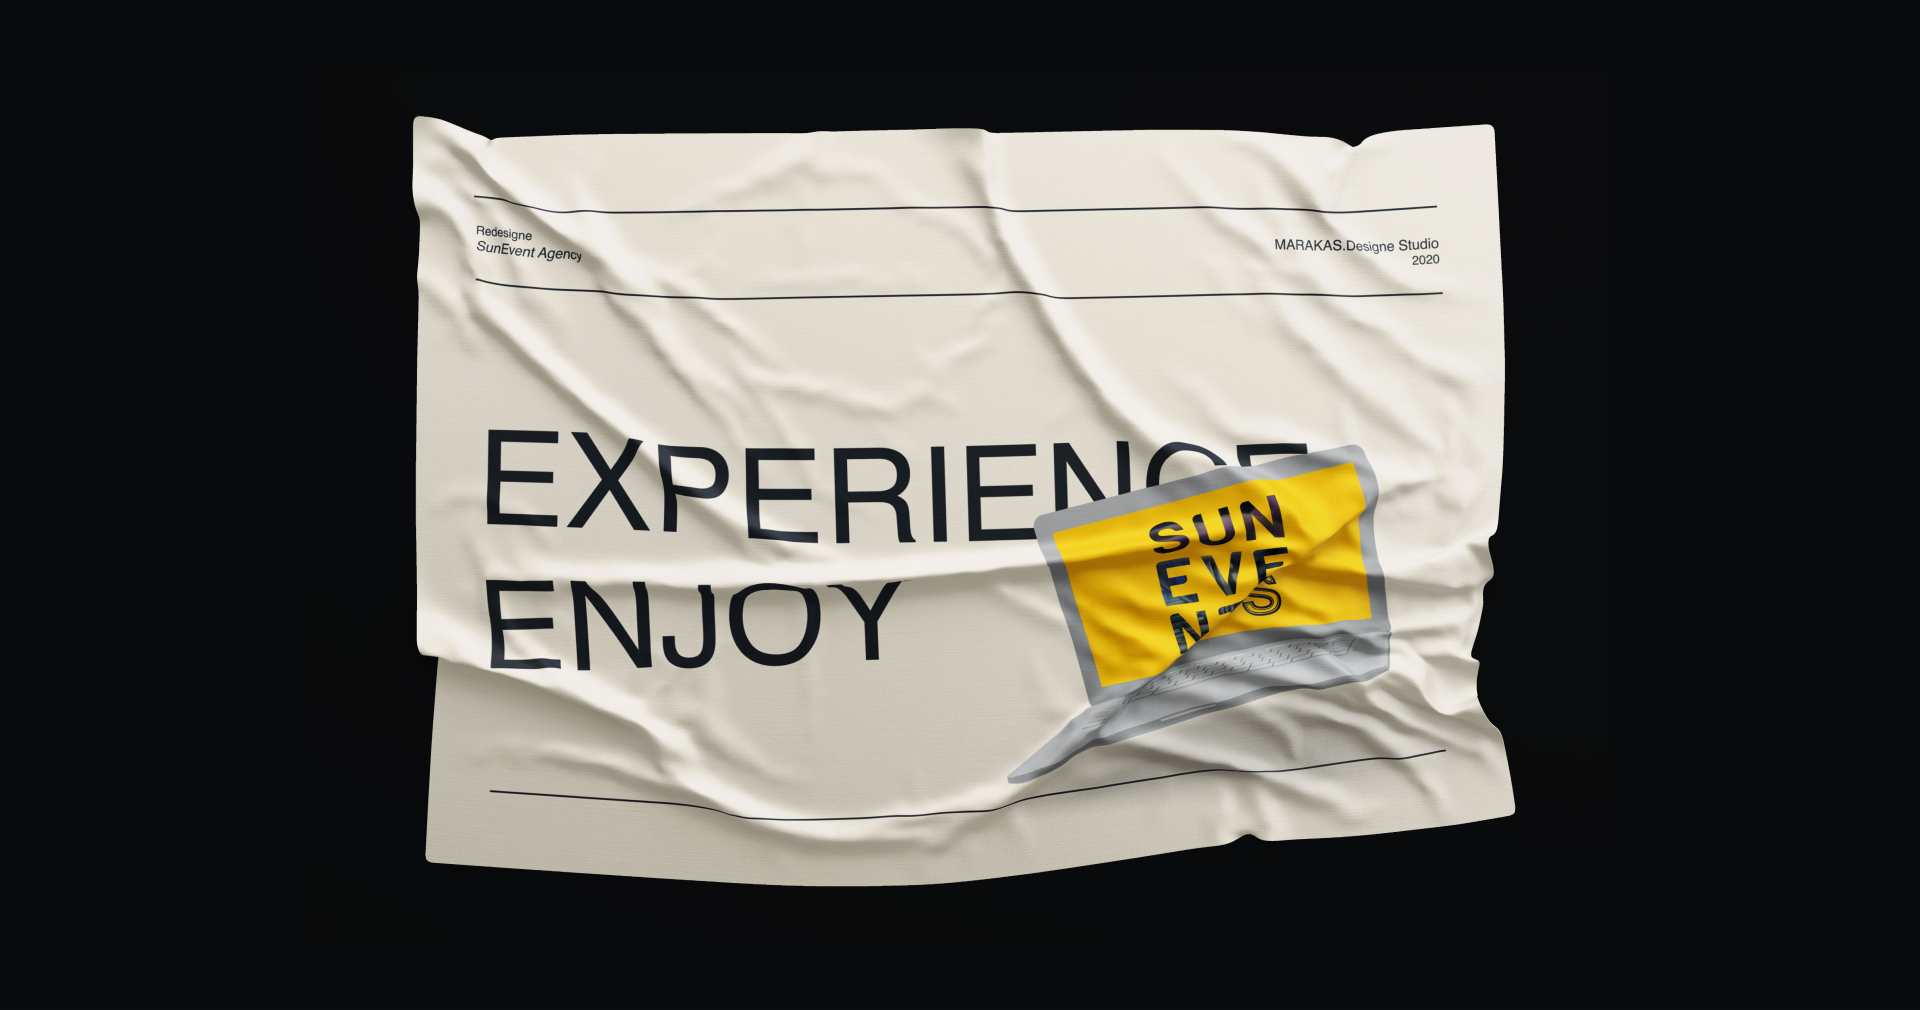 SunEvent Agency. Experience Enjoy